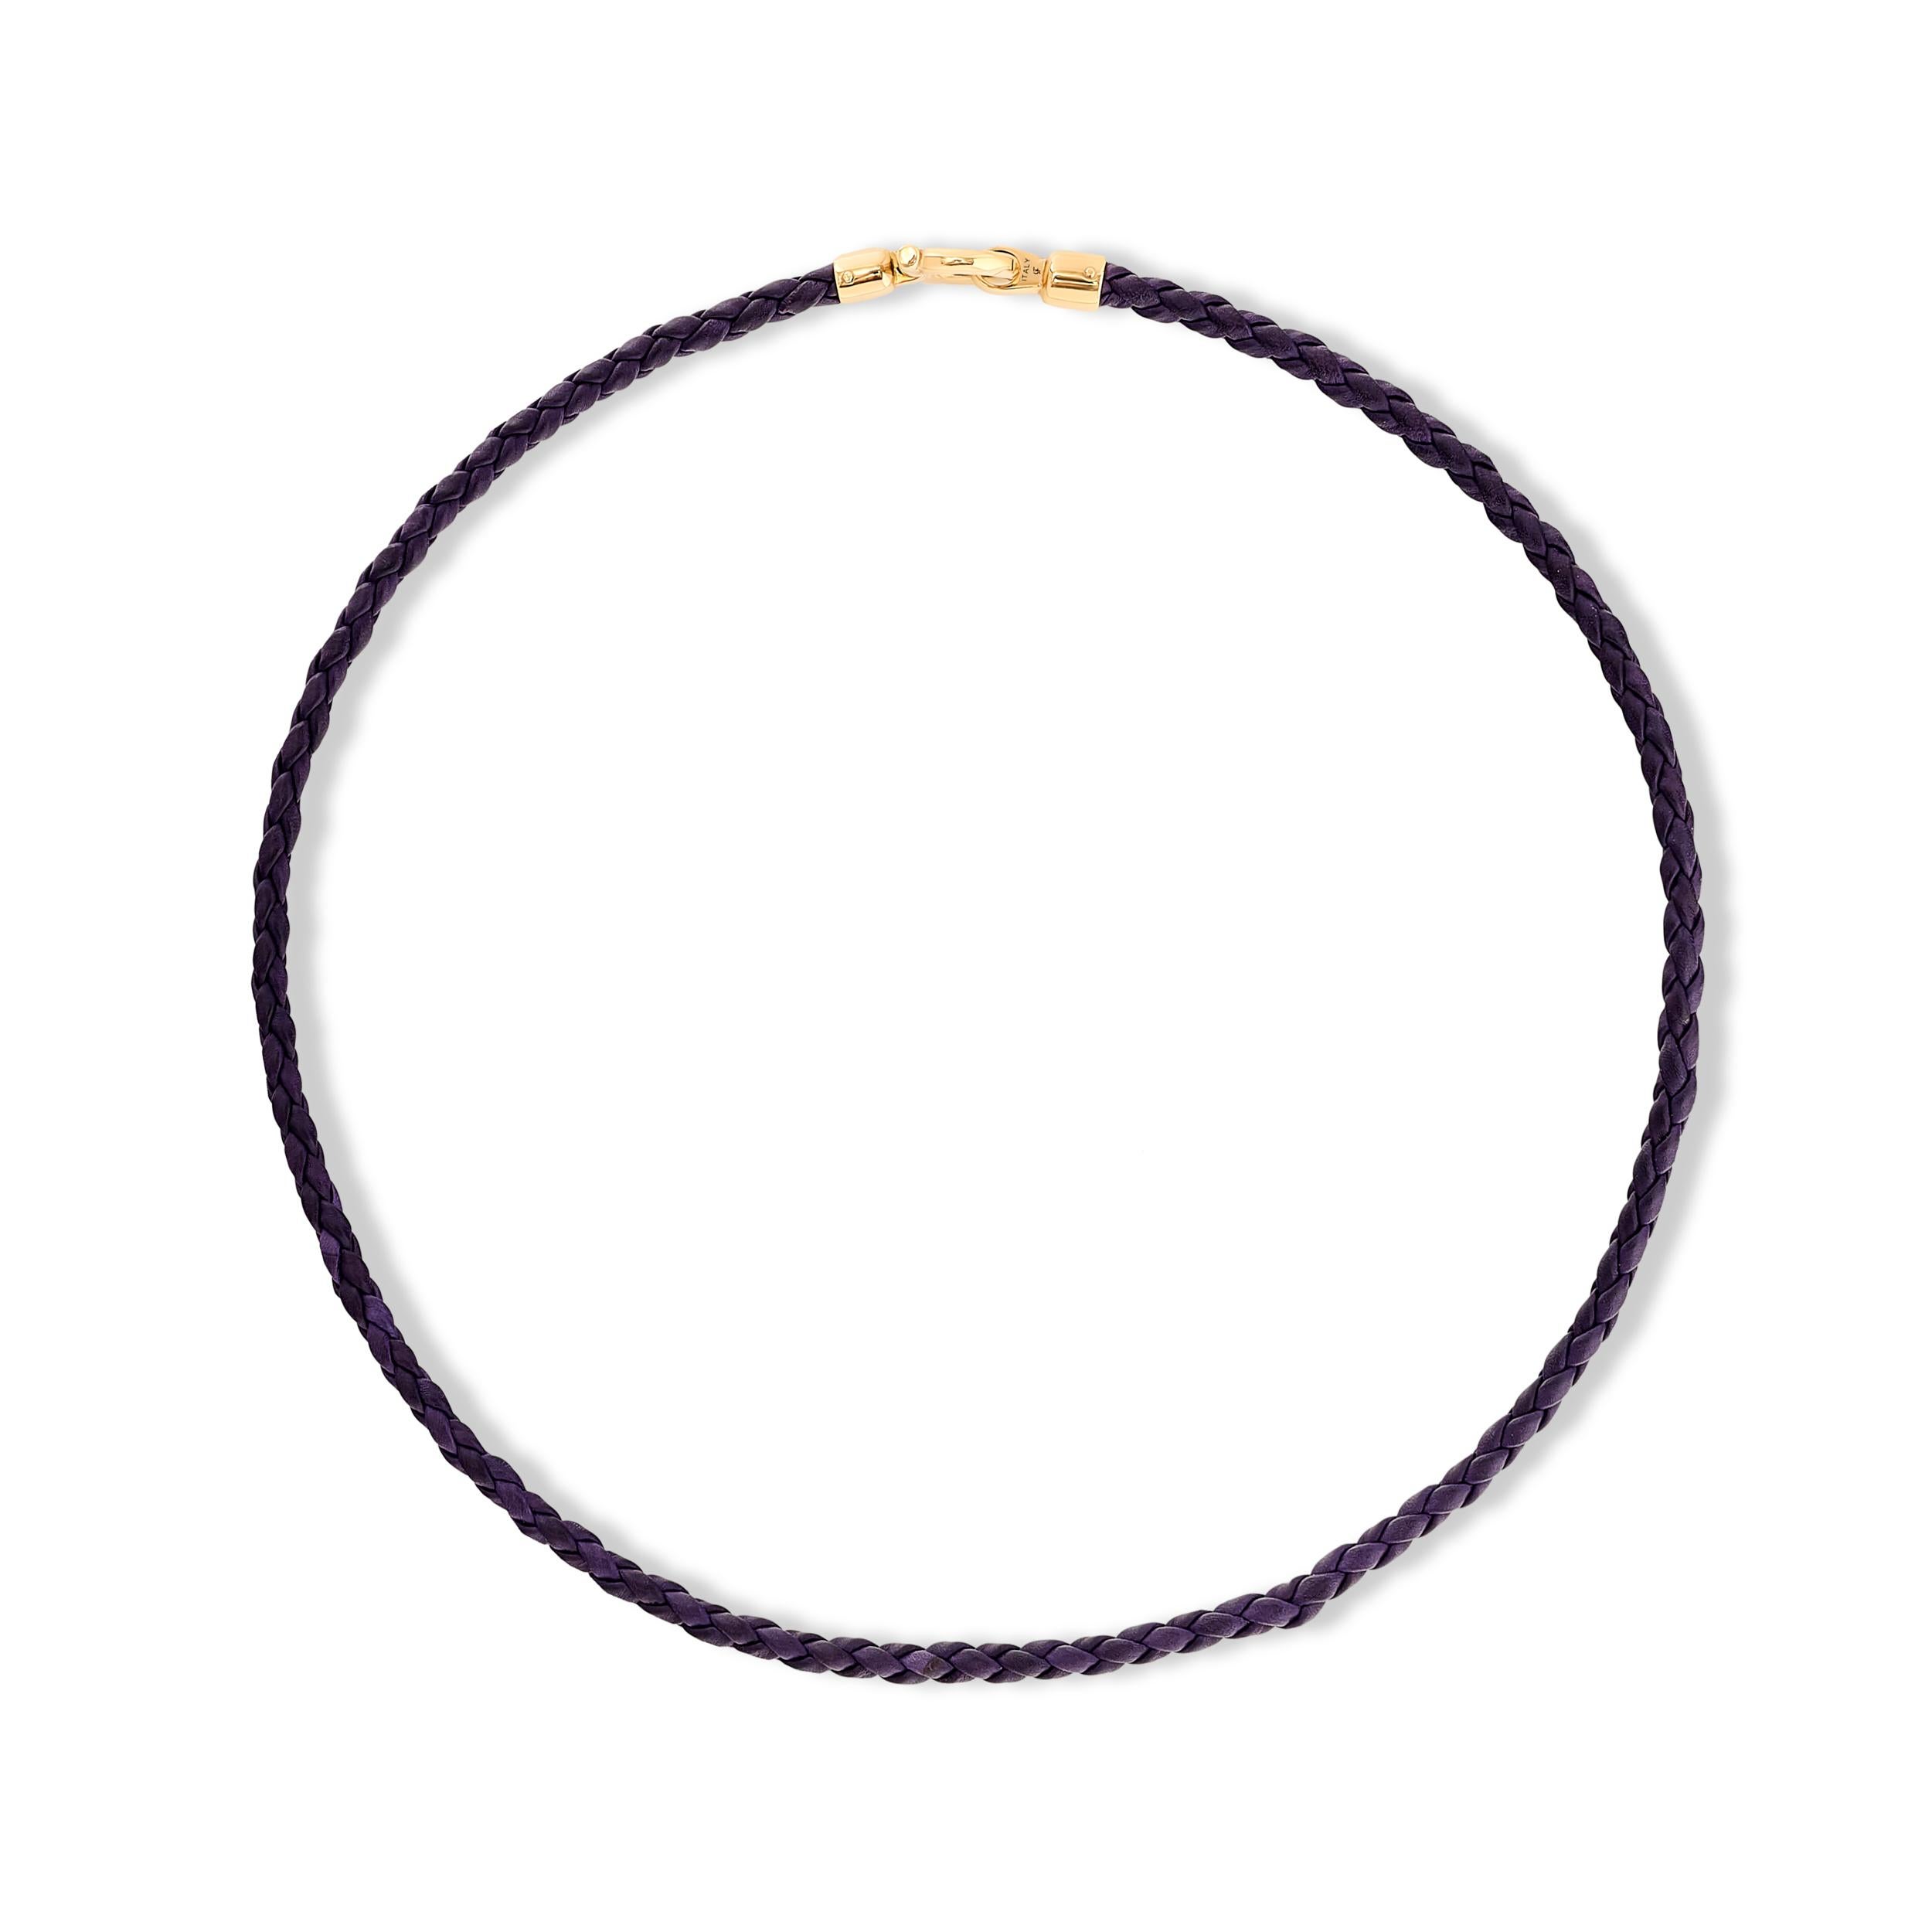 Ferragamo 18 Karat Purple Cord Double Bracelet/Necklace with Hook Closure In Excellent Condition For Sale In Philadelphia, PA